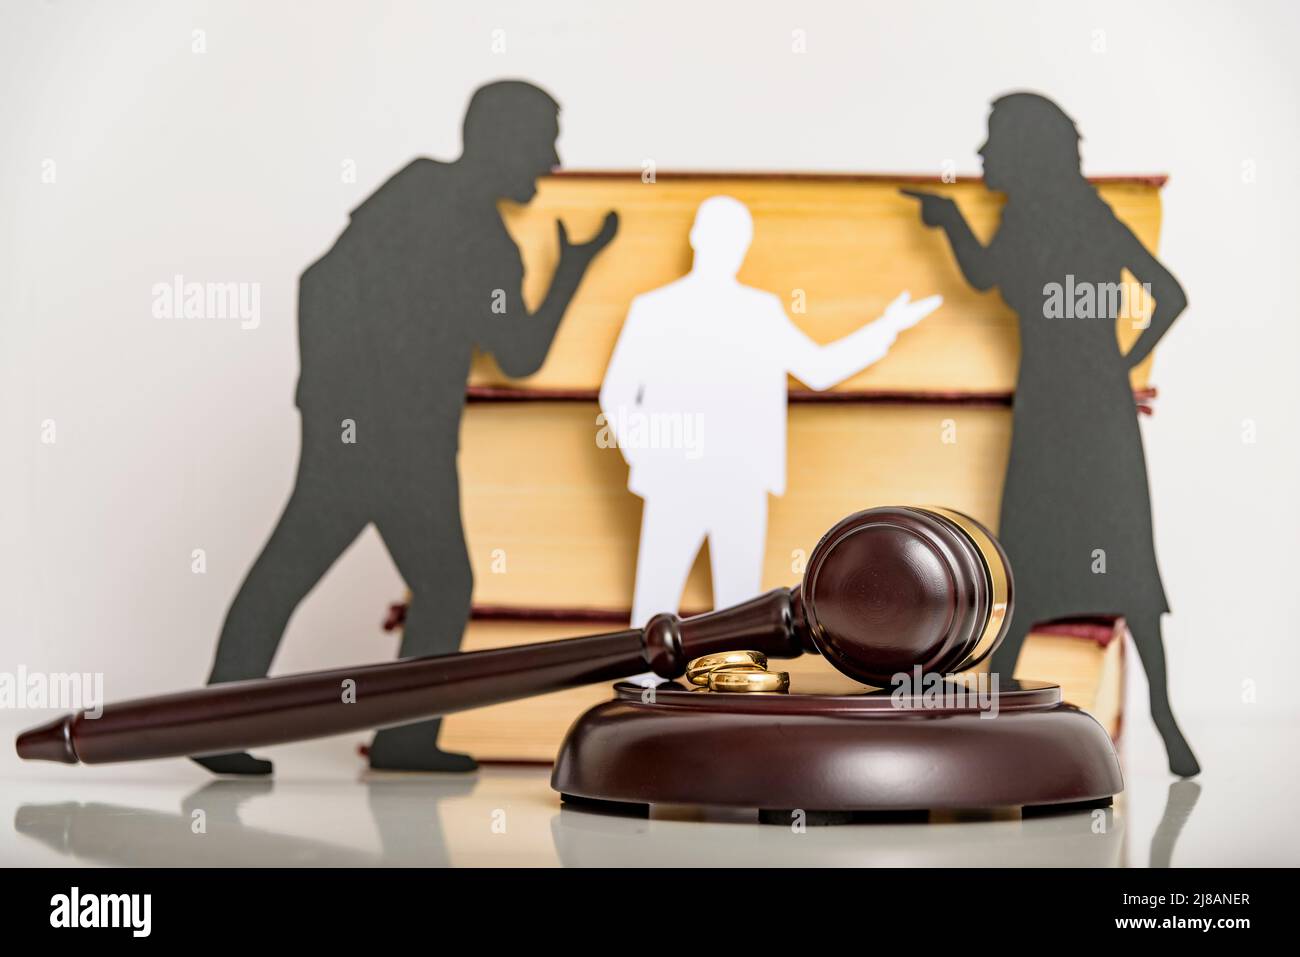 Silhouette symbol. Child custody. Family law proceedings. Divorce mediation, legal separation. Stock Photo